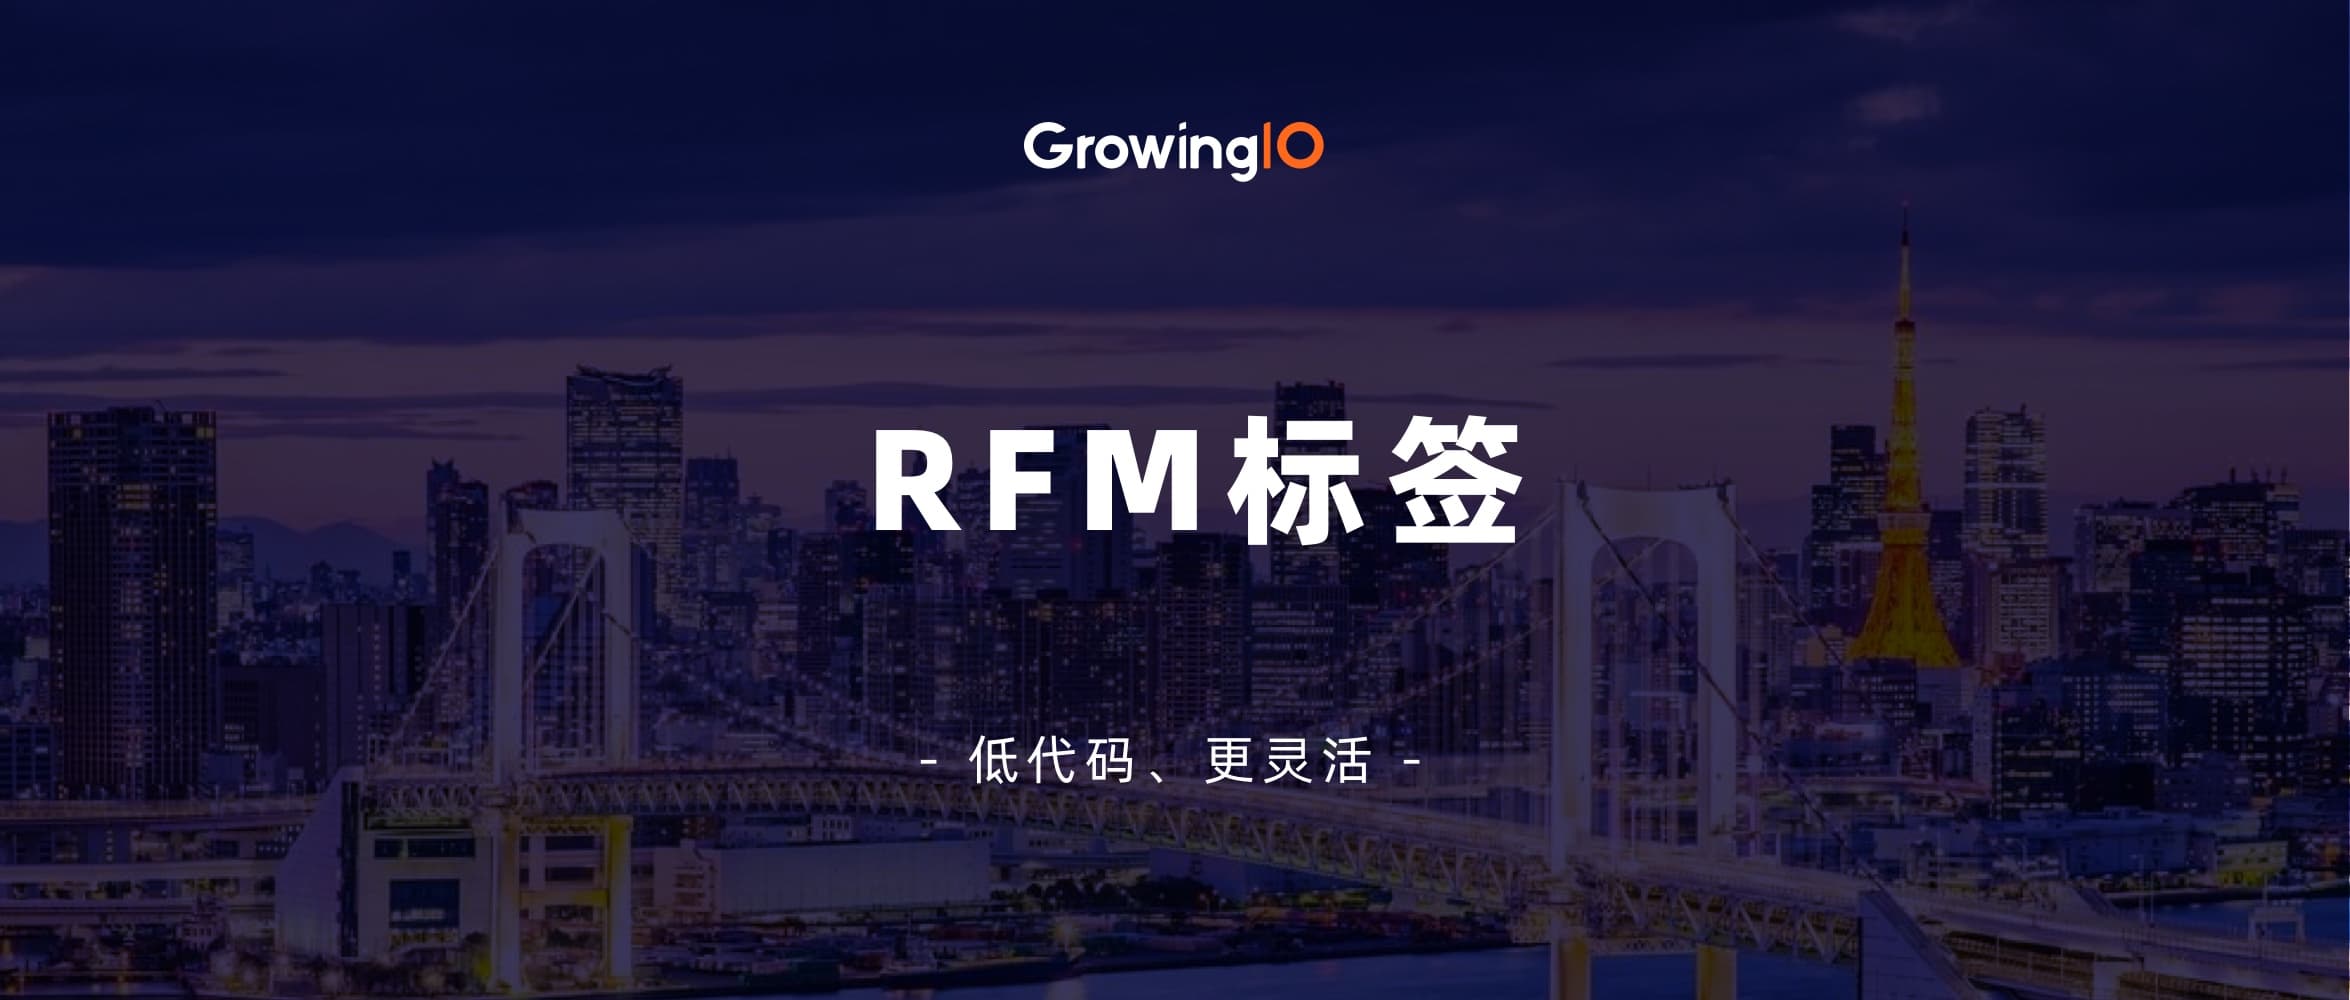 GrowingIO「RFM标签」：快速实现精准分层营销，操作零门槛